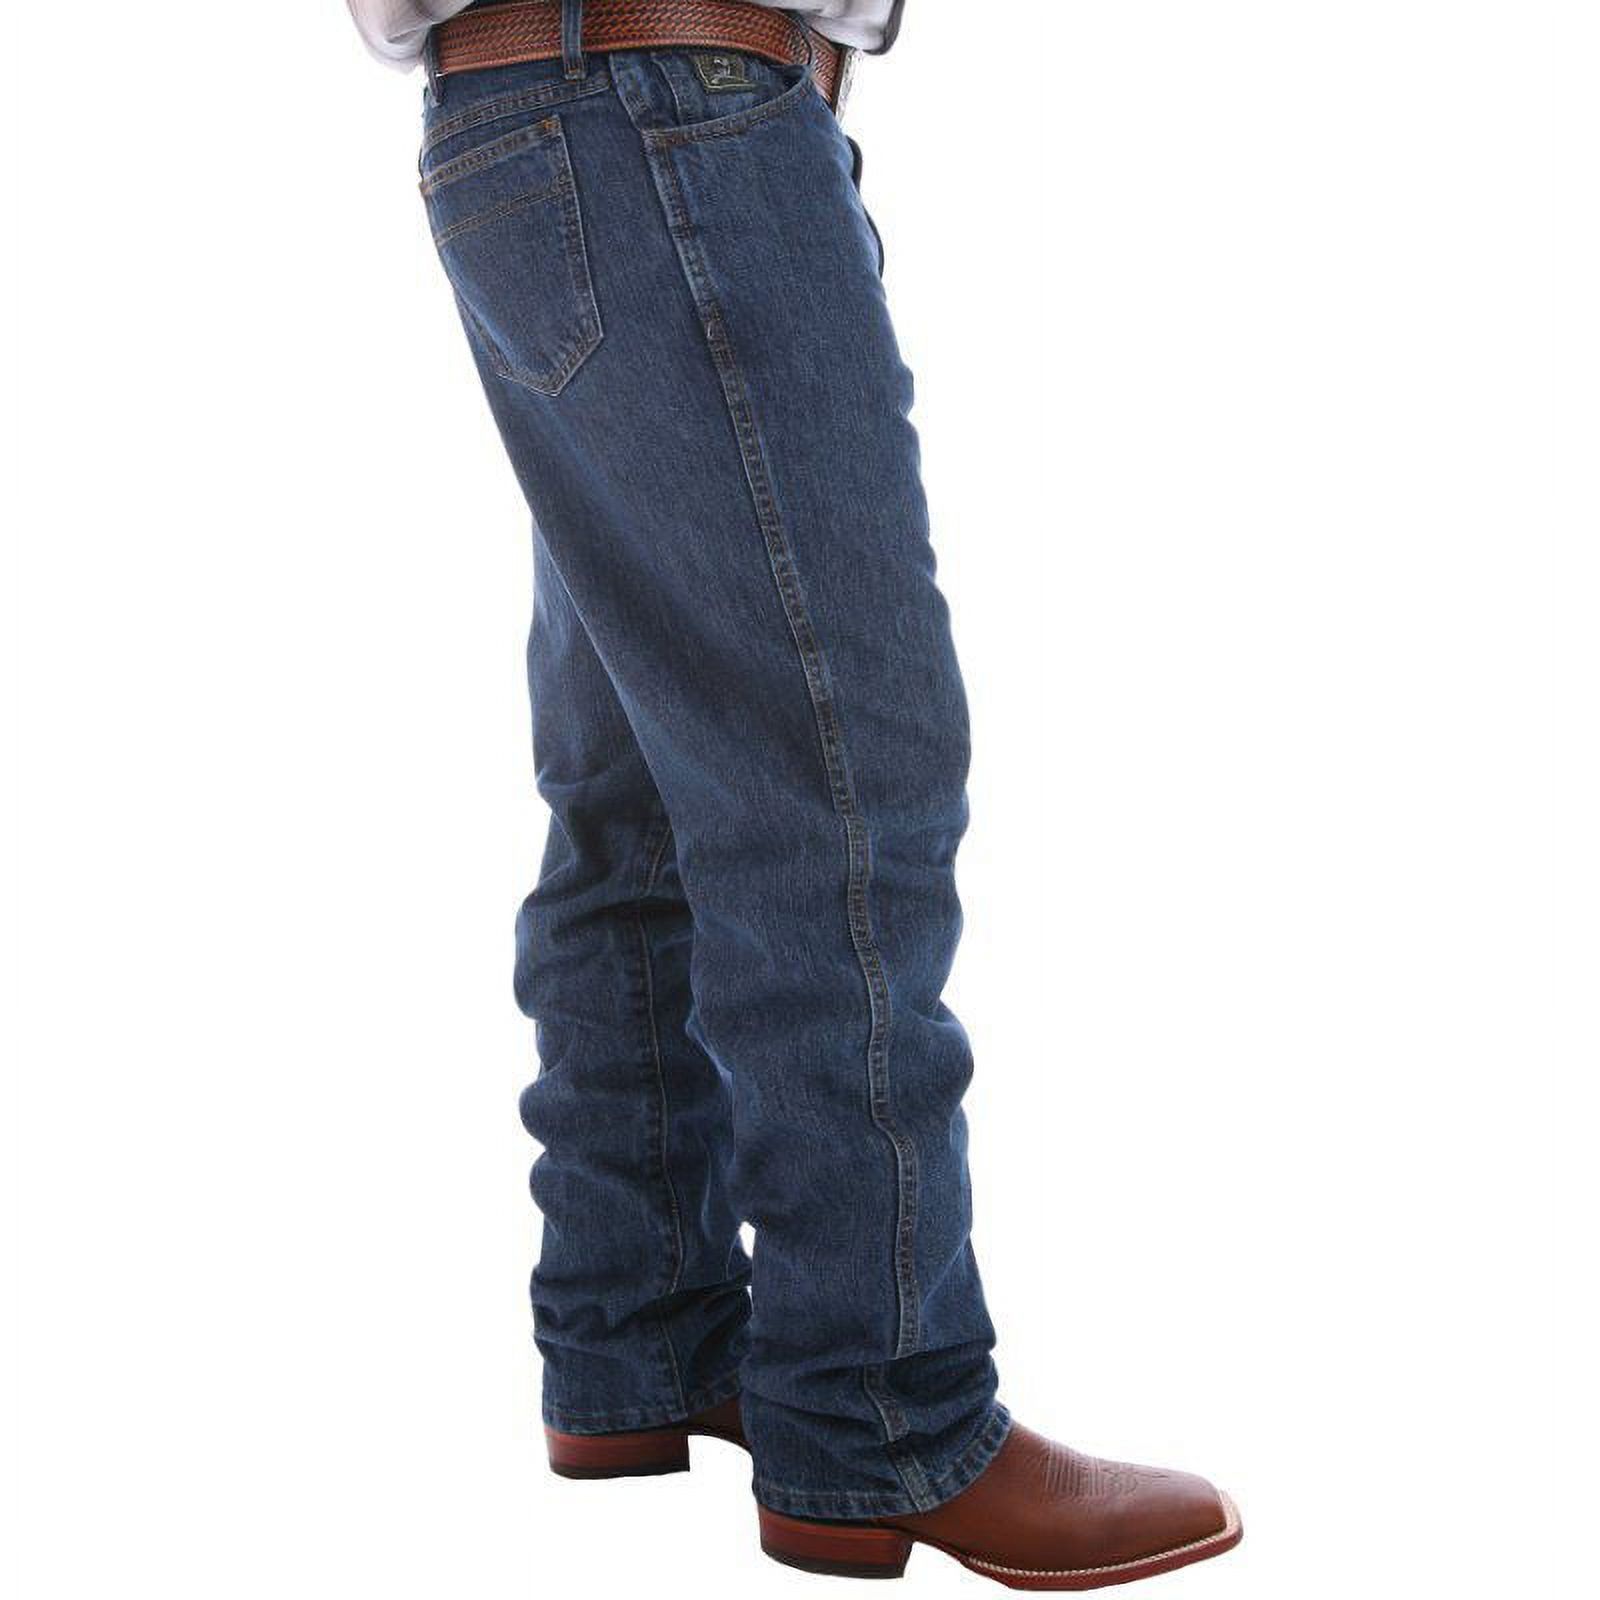 Cinch Apparel Mens Green Label Original Fit Jeans 40x30 Dark Stonewash - image 2 of 4